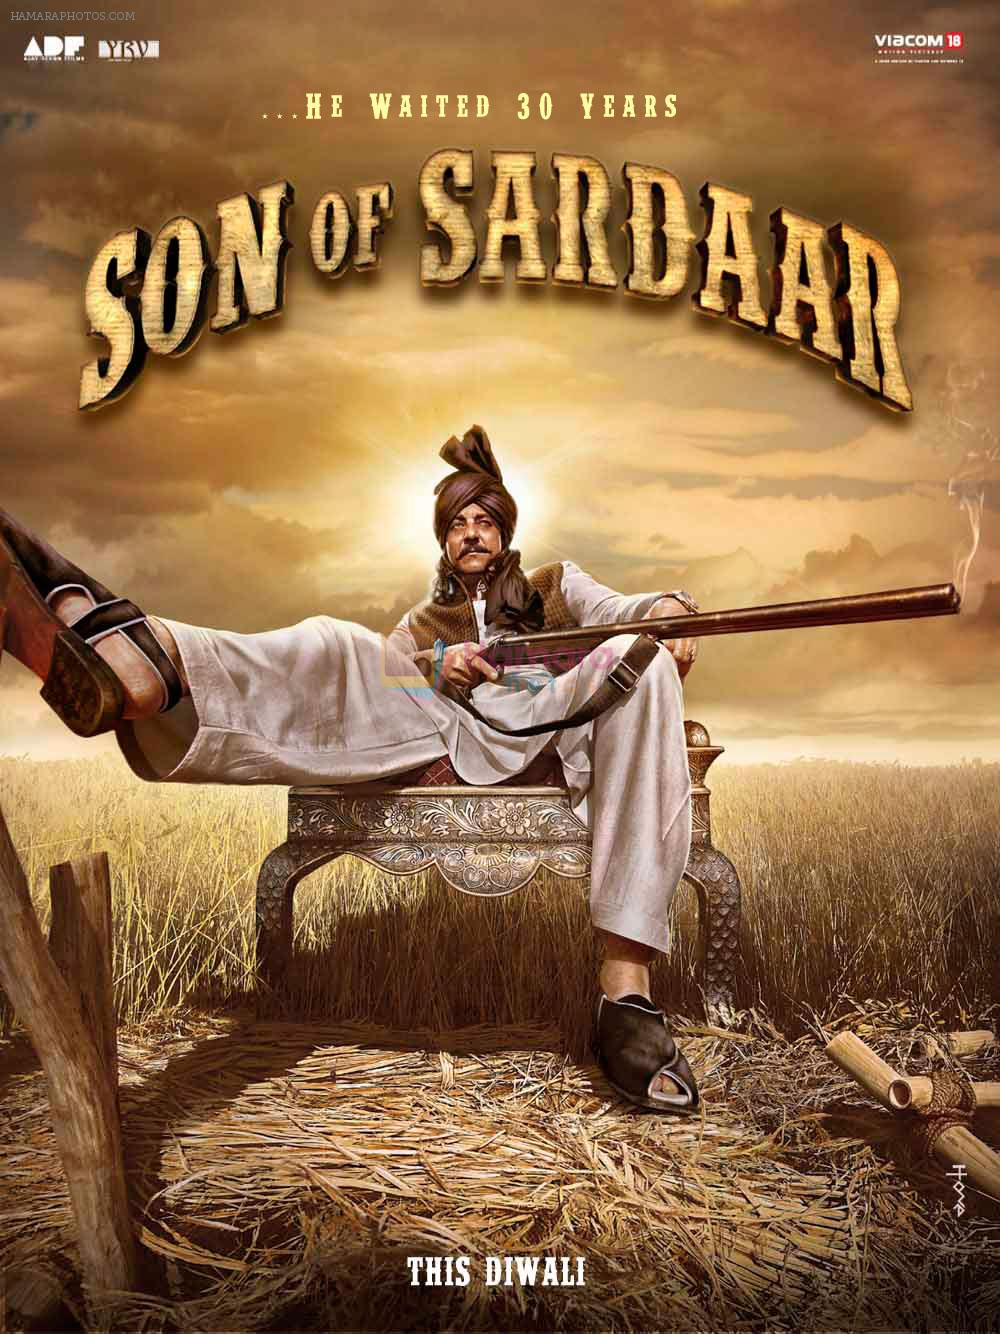 Sanjay dutt in Son Of Sardaar